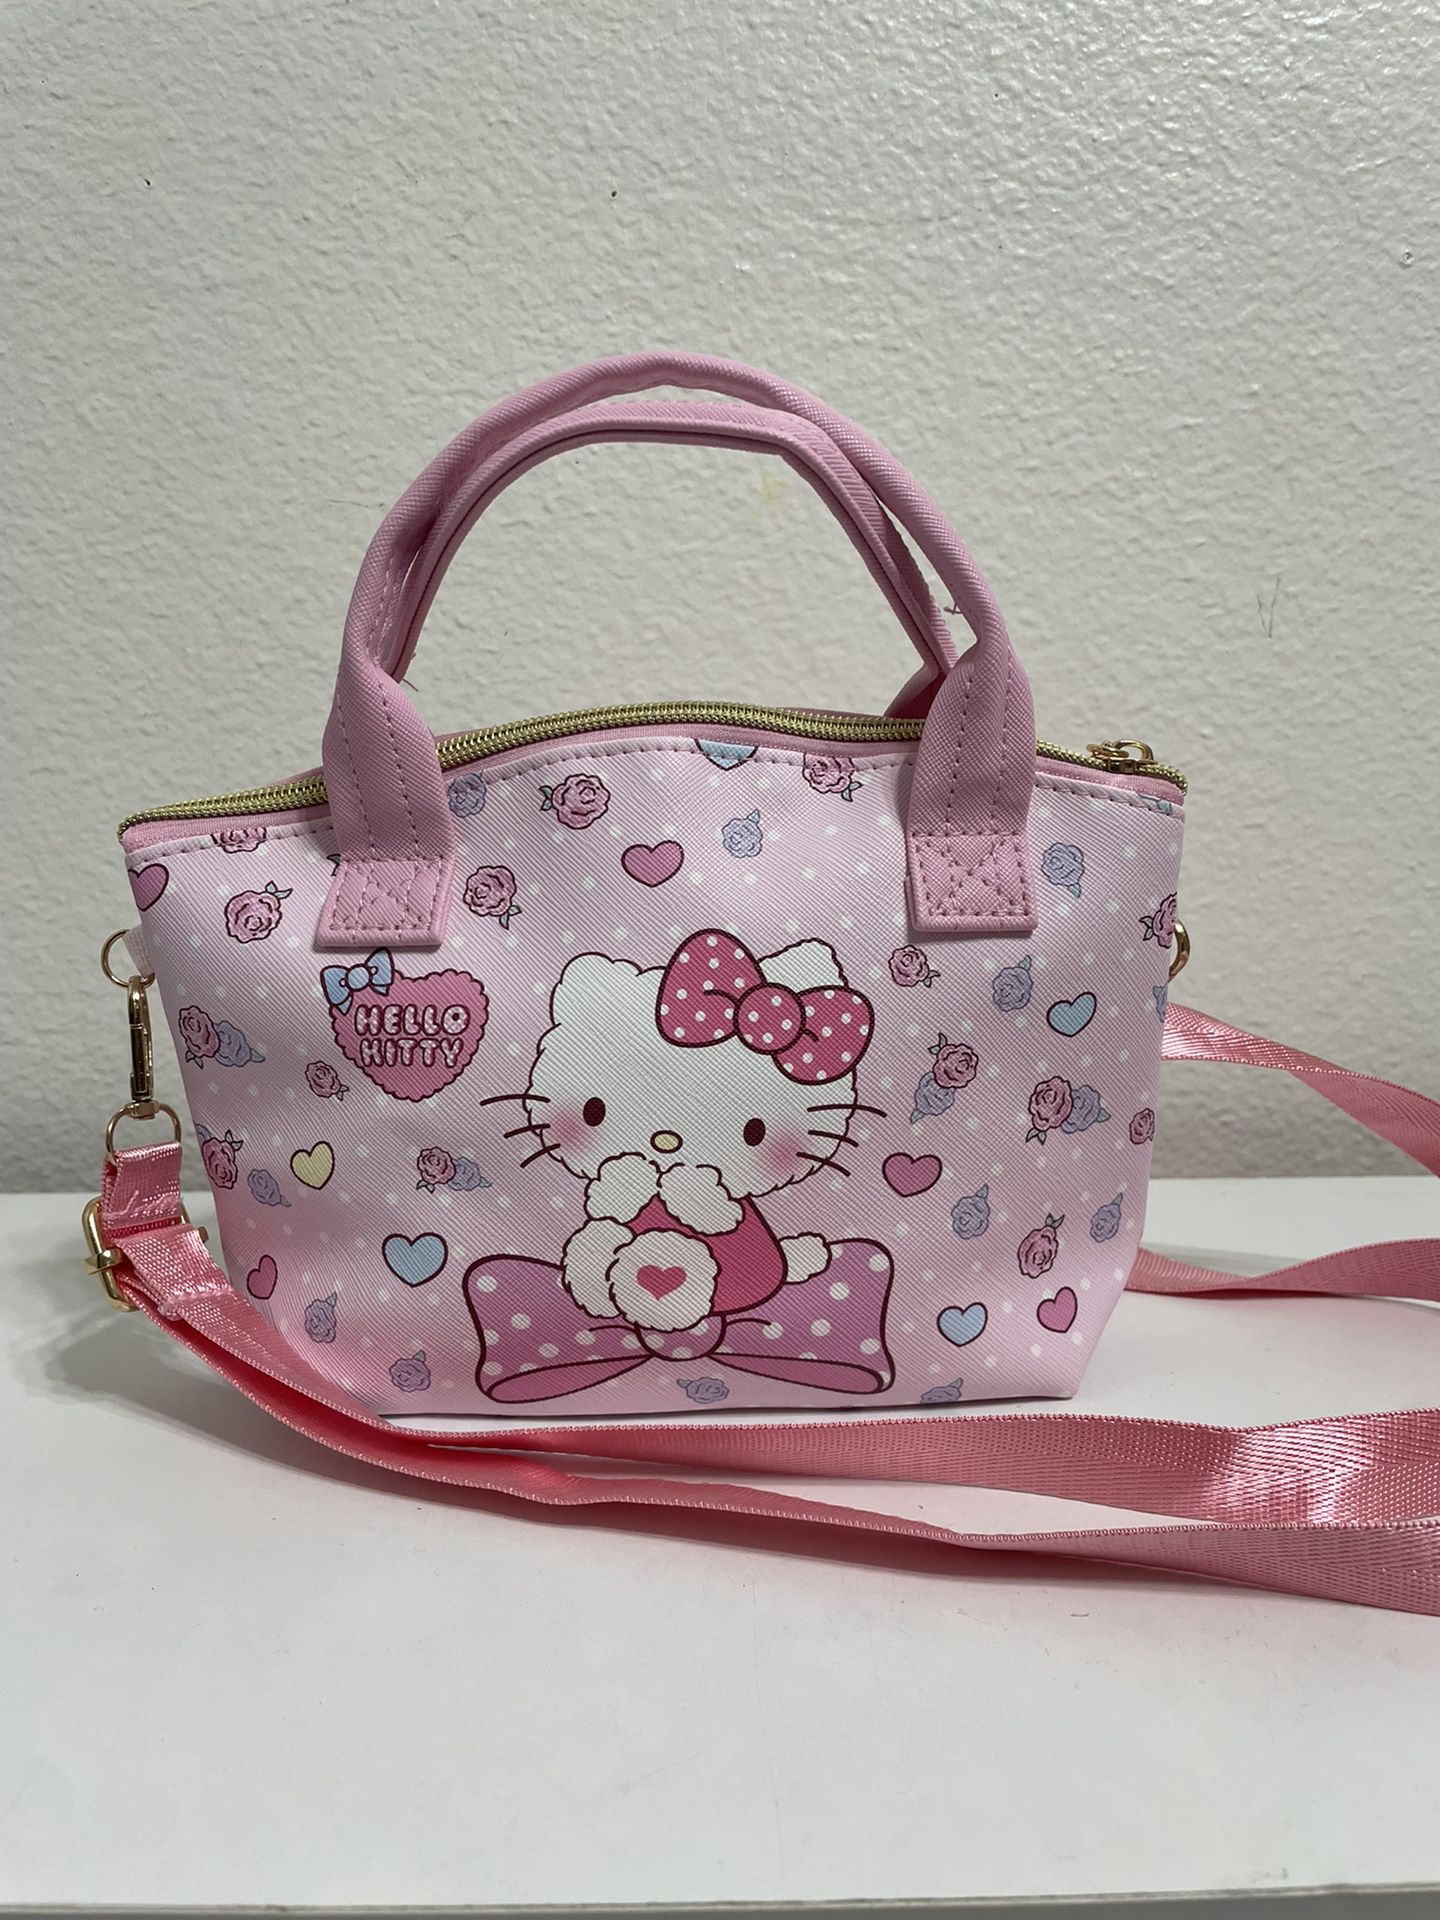 Hello kitty Girls cute handbag purse